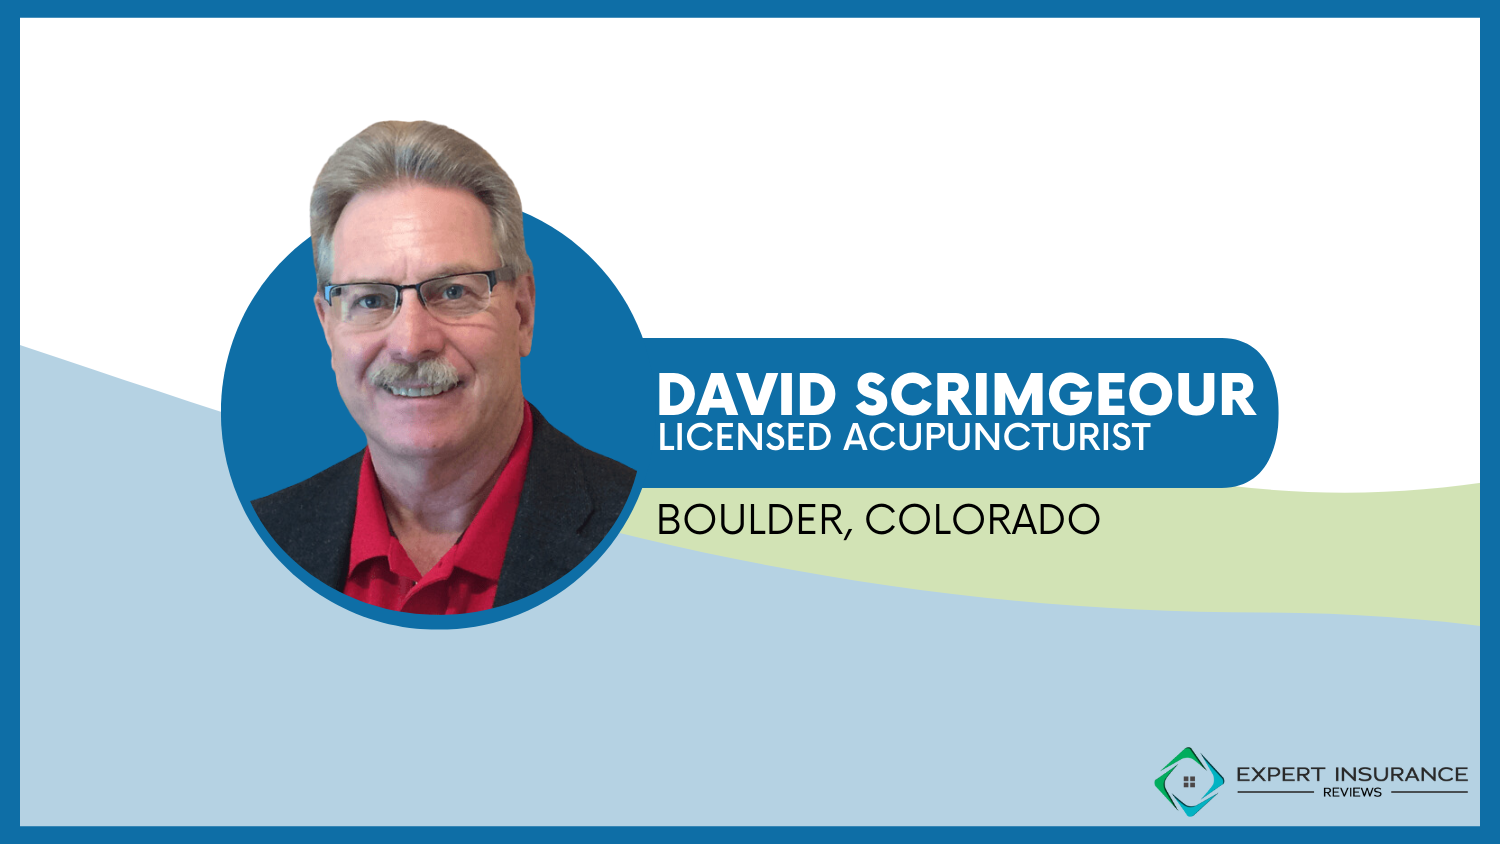 Best Acupuncturists That Accept Medicare: David Scrimgeour